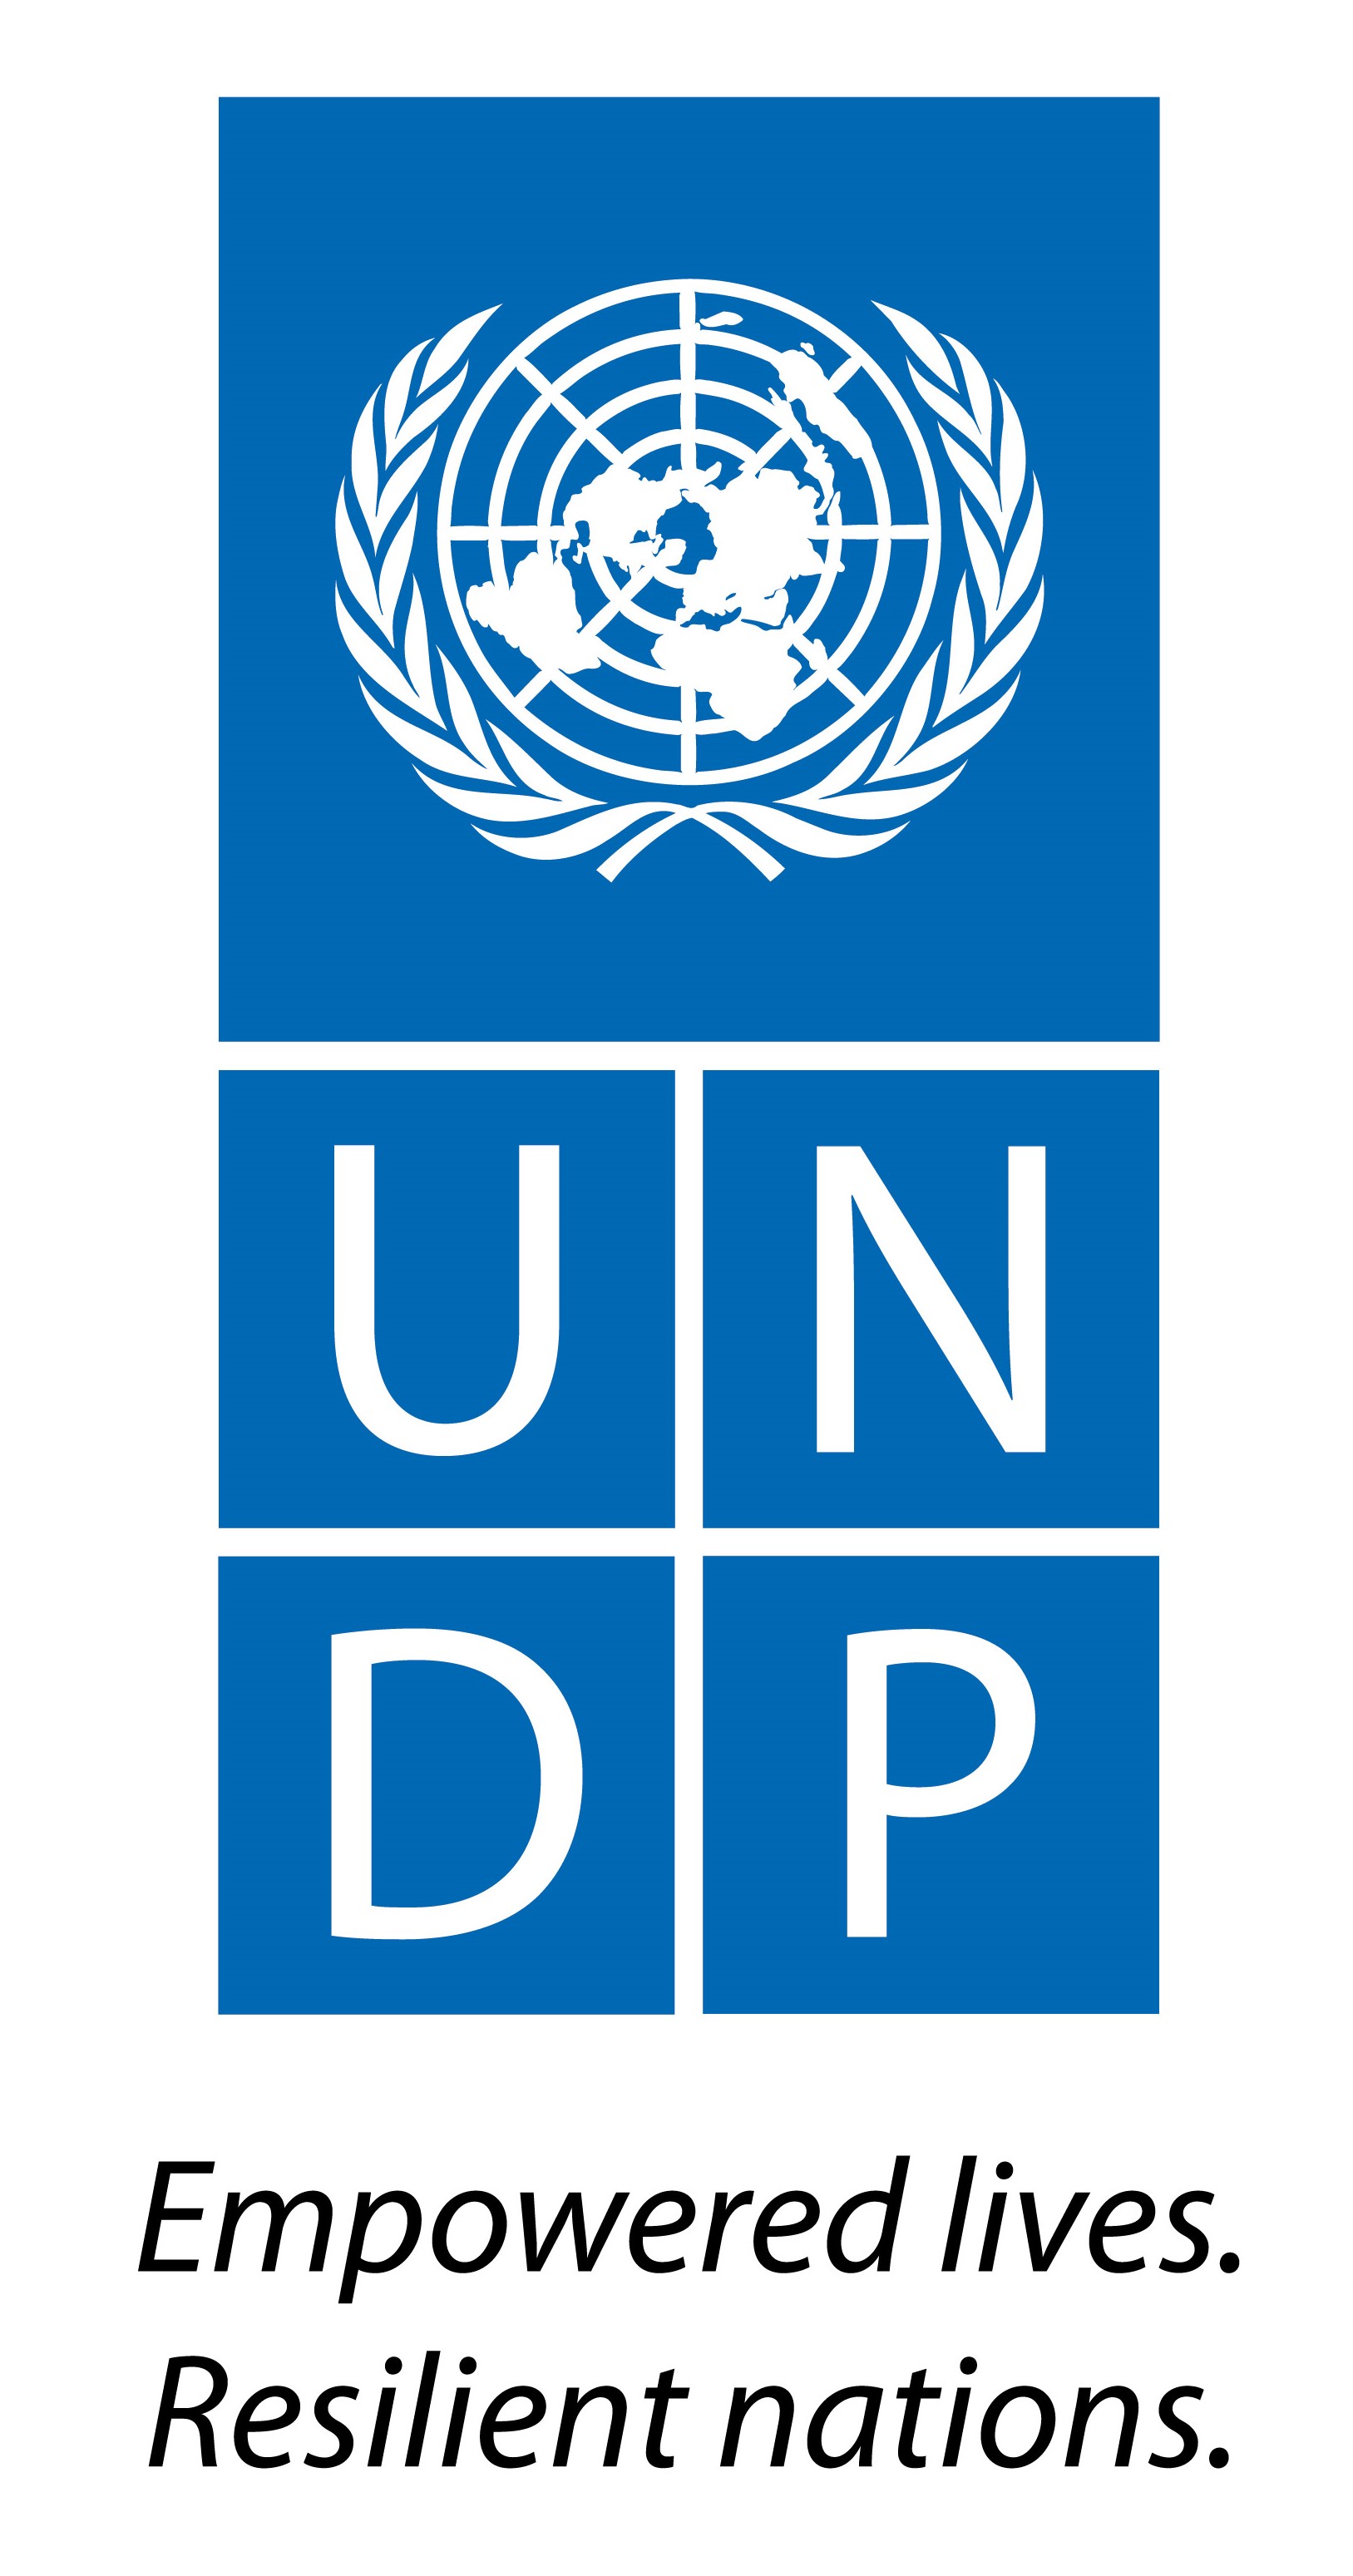 Программа Развития ООН (ПРООН)